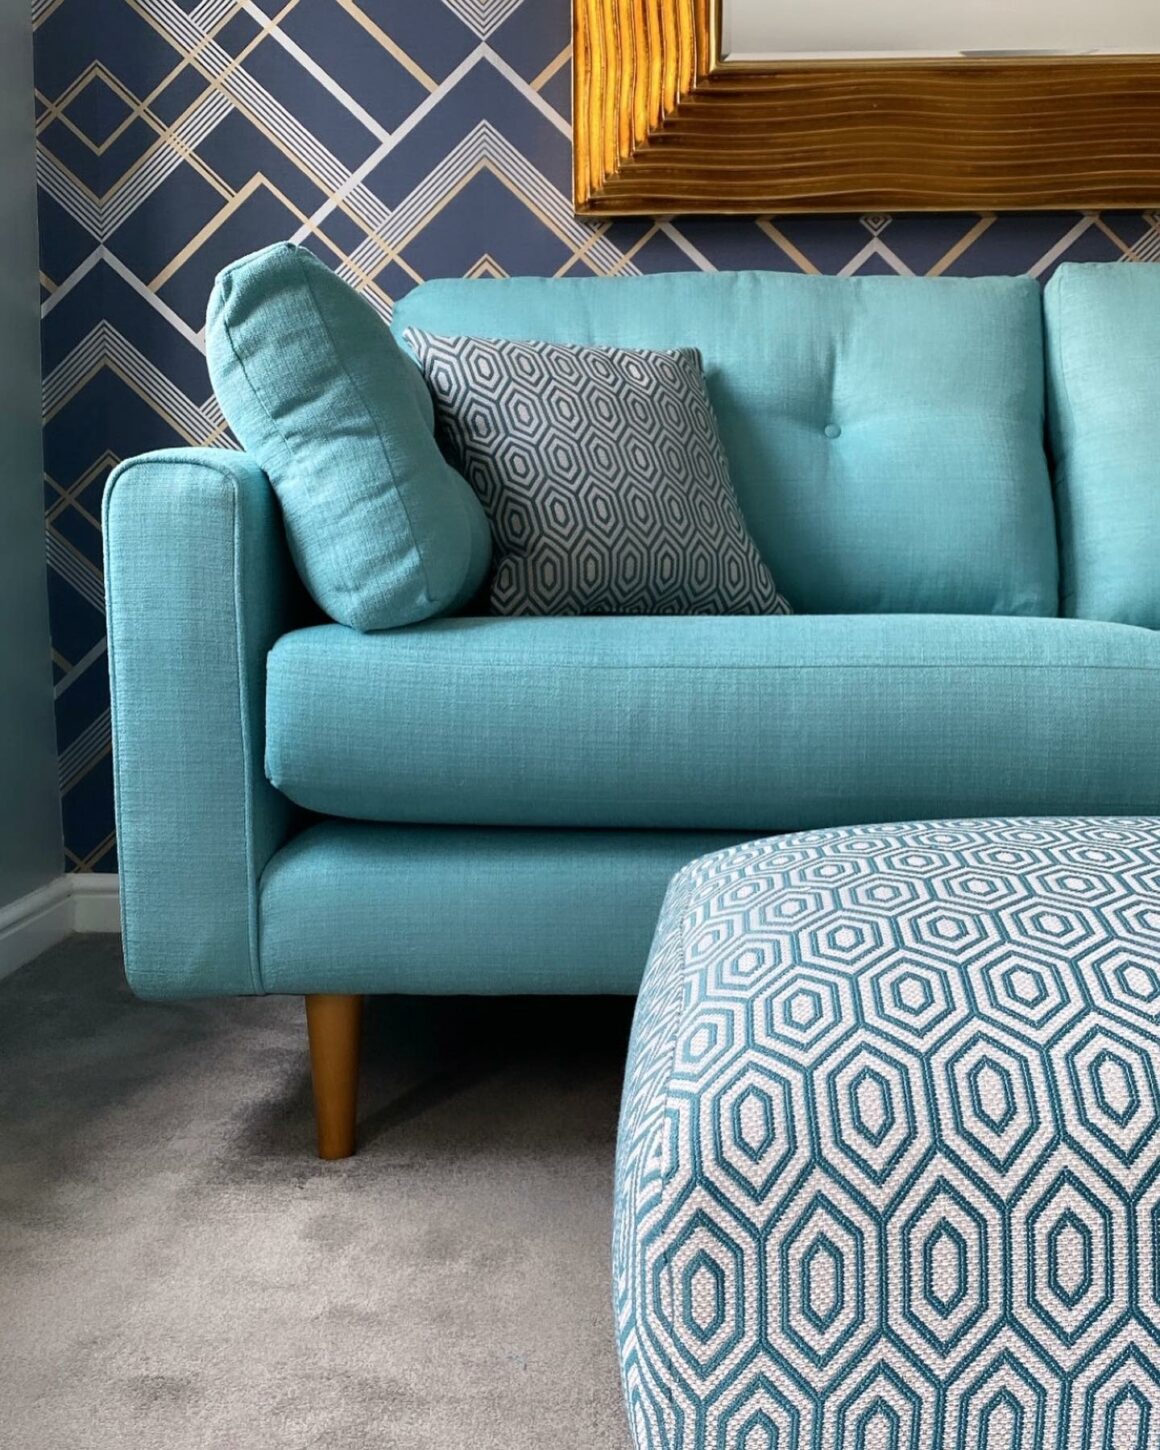 Oak Furnitureland aqua blue Brighton retro-style sofa with geometric patterned footstool and matching scatter cushion.